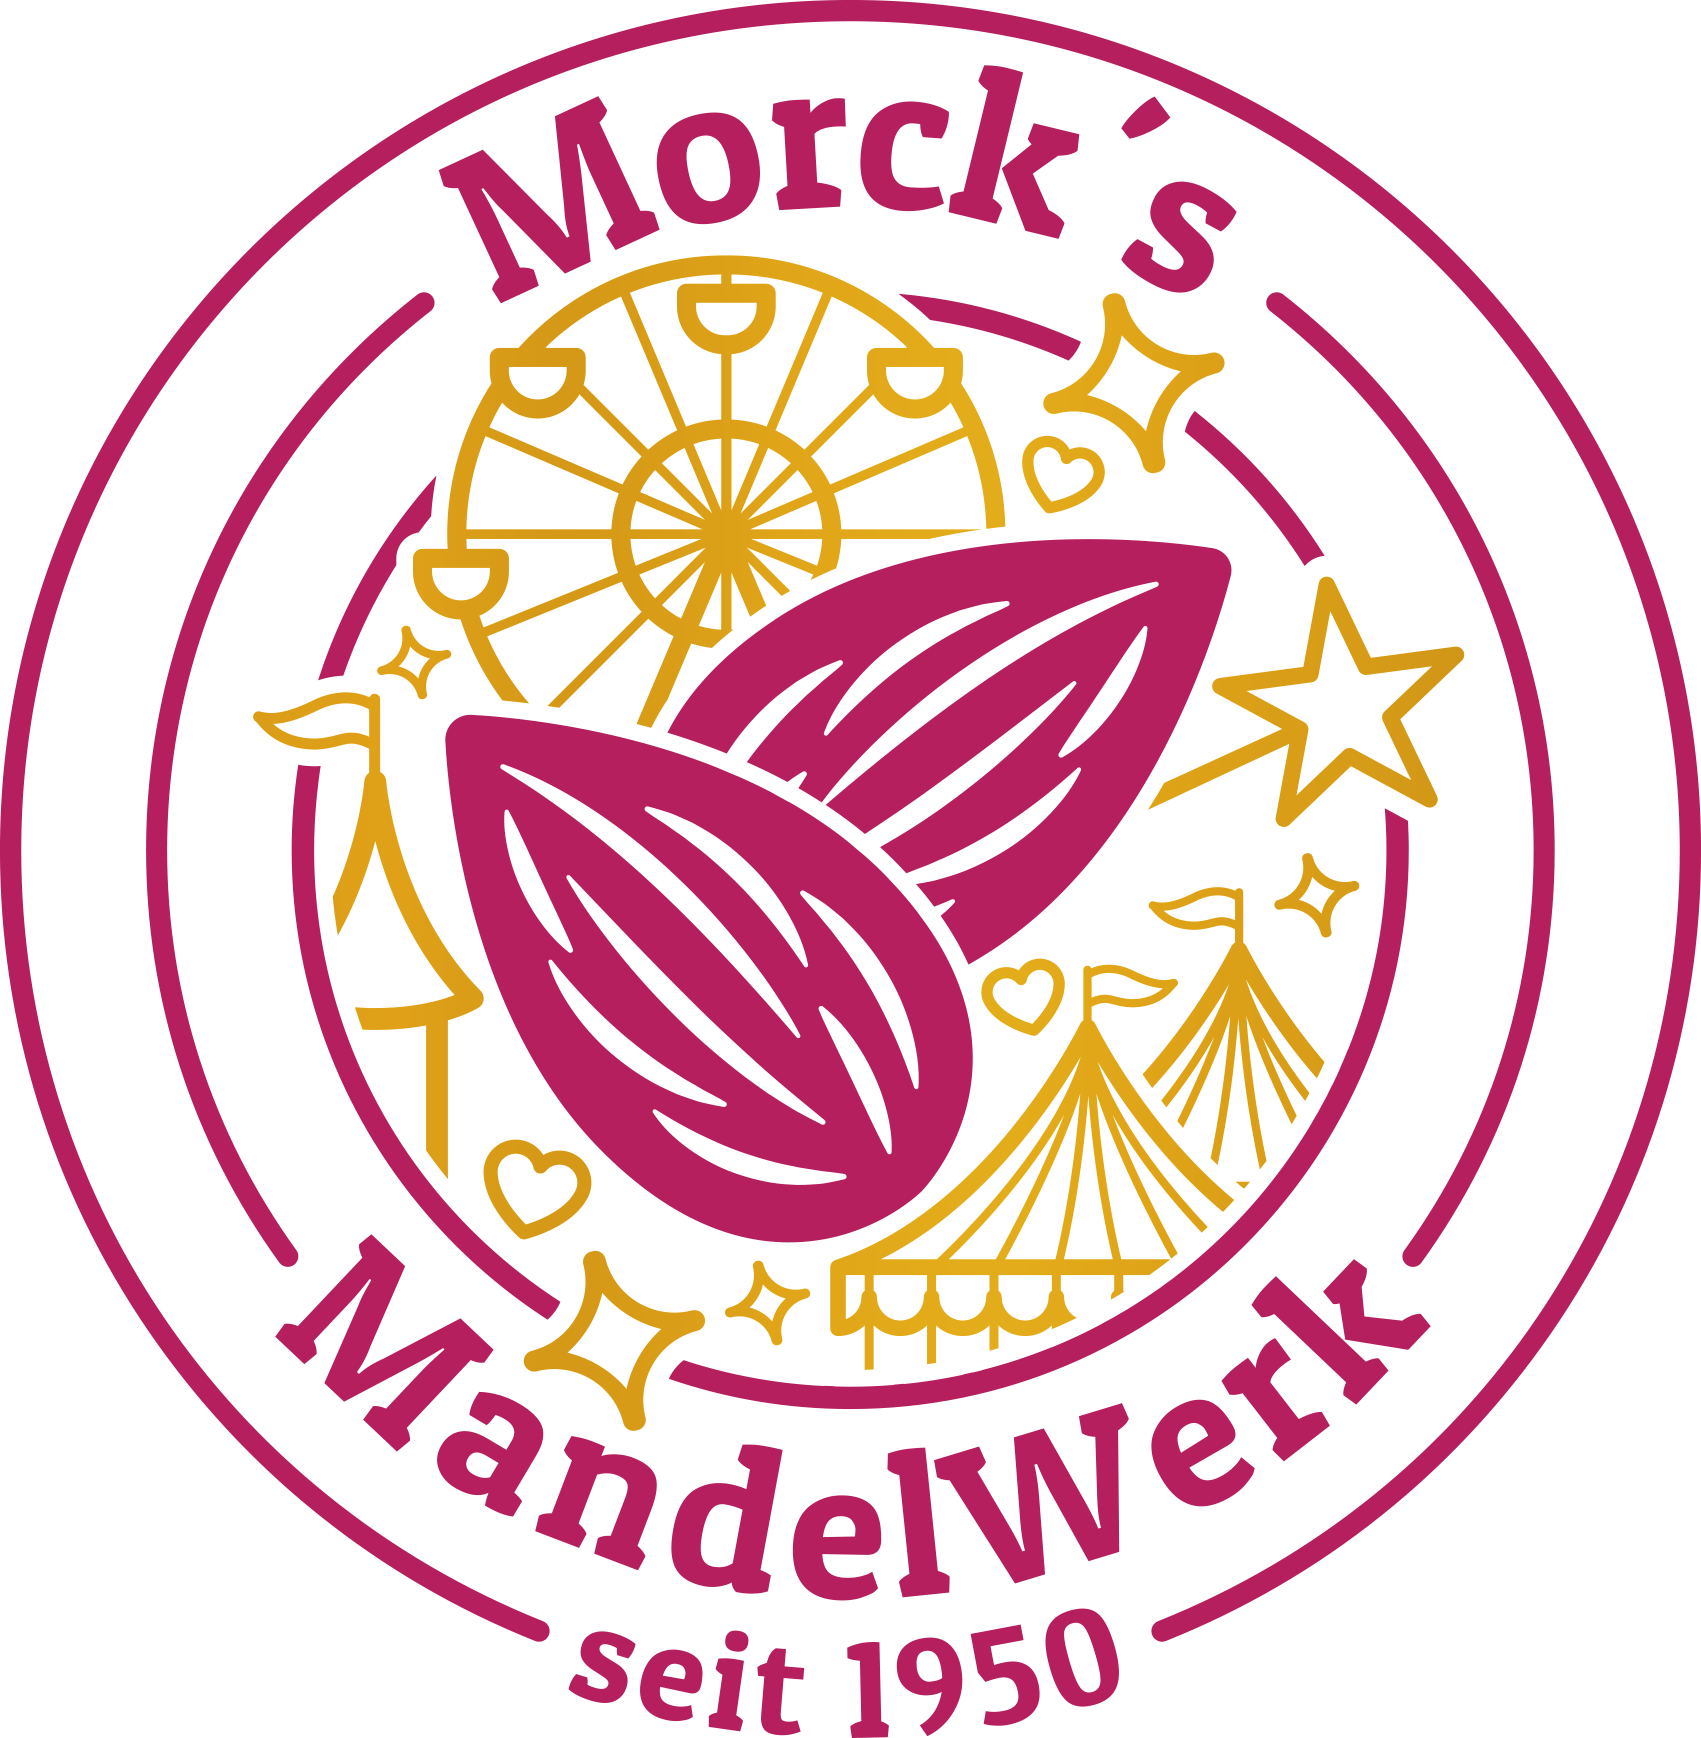 Morck’s MandelWerk